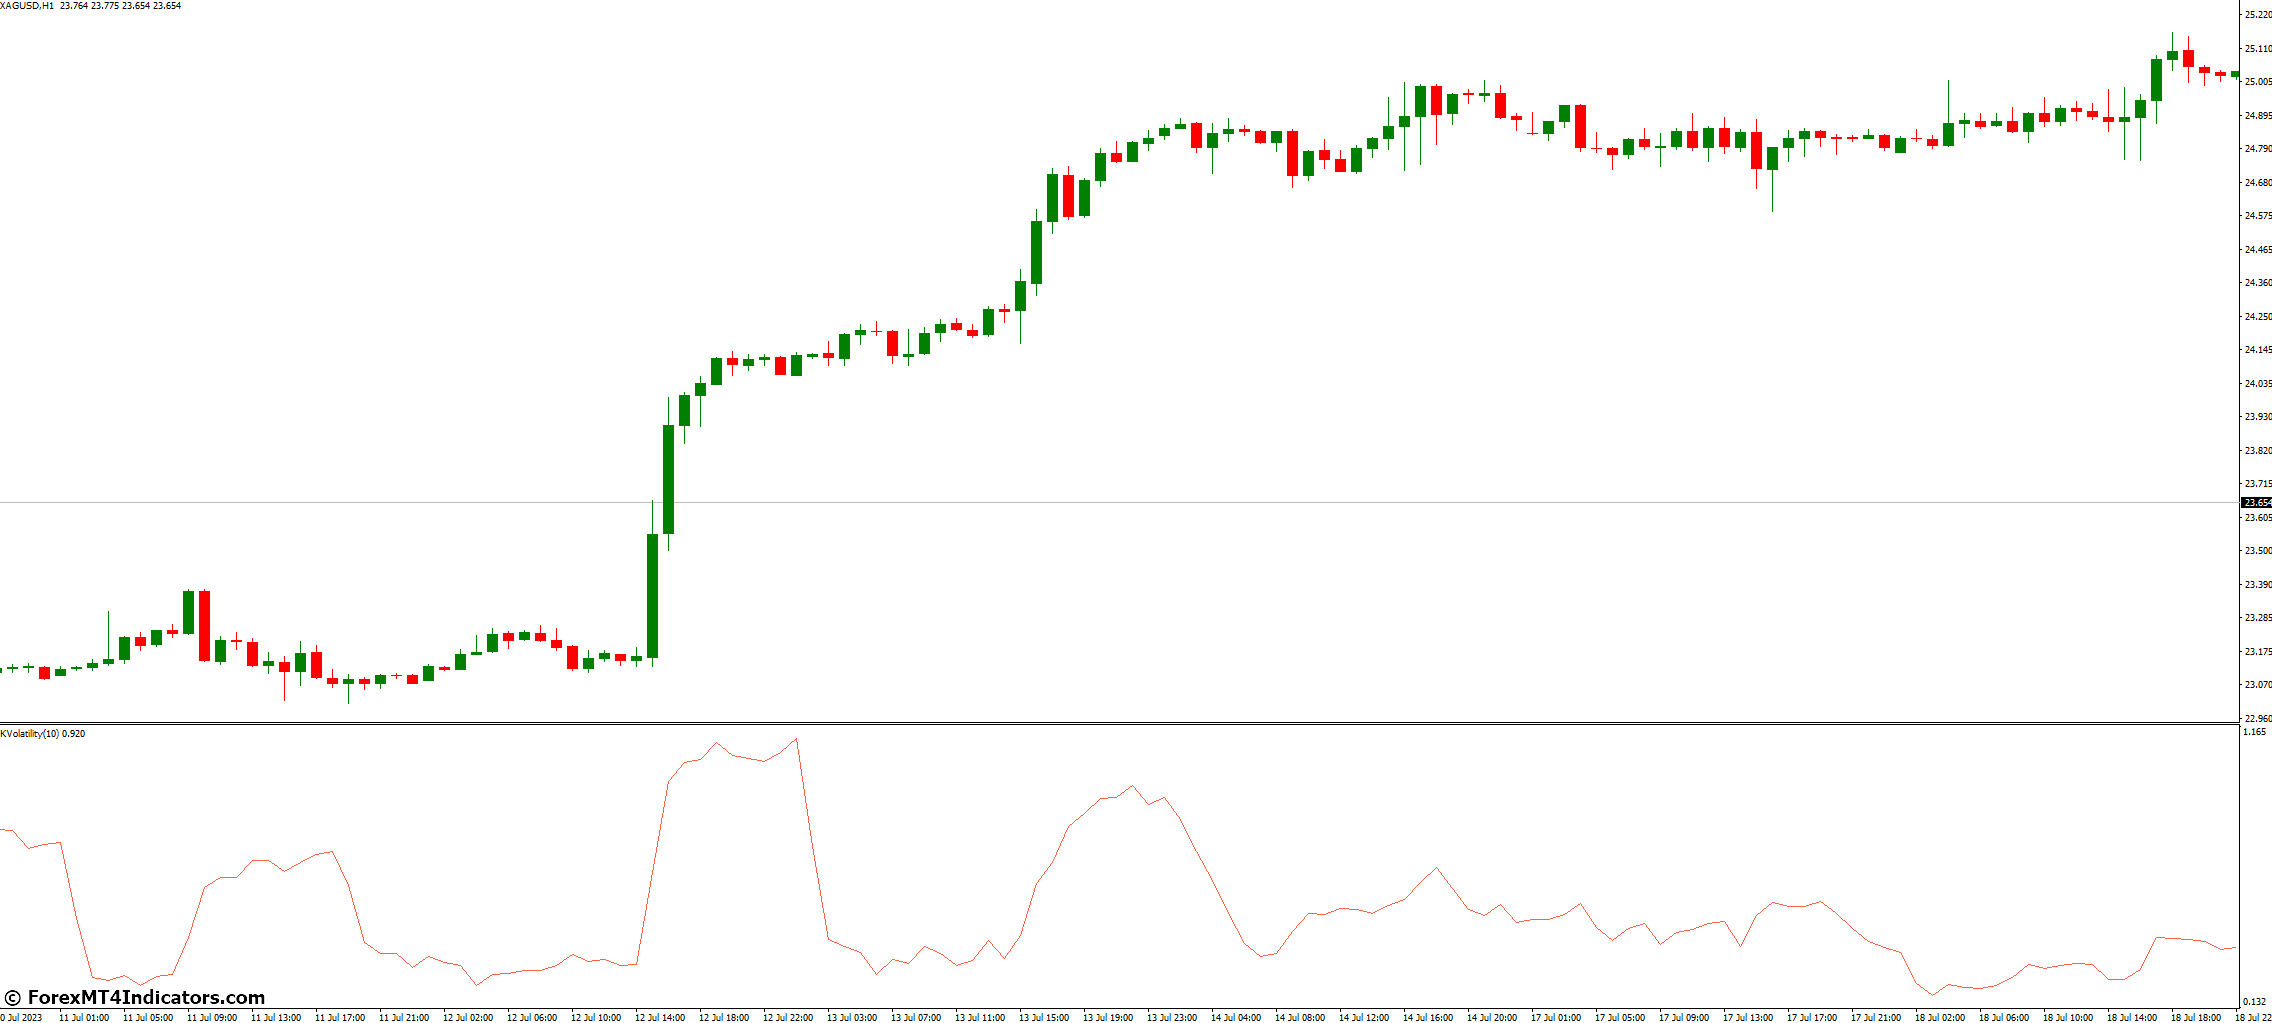 Using the Kaufman Volatility Indicator